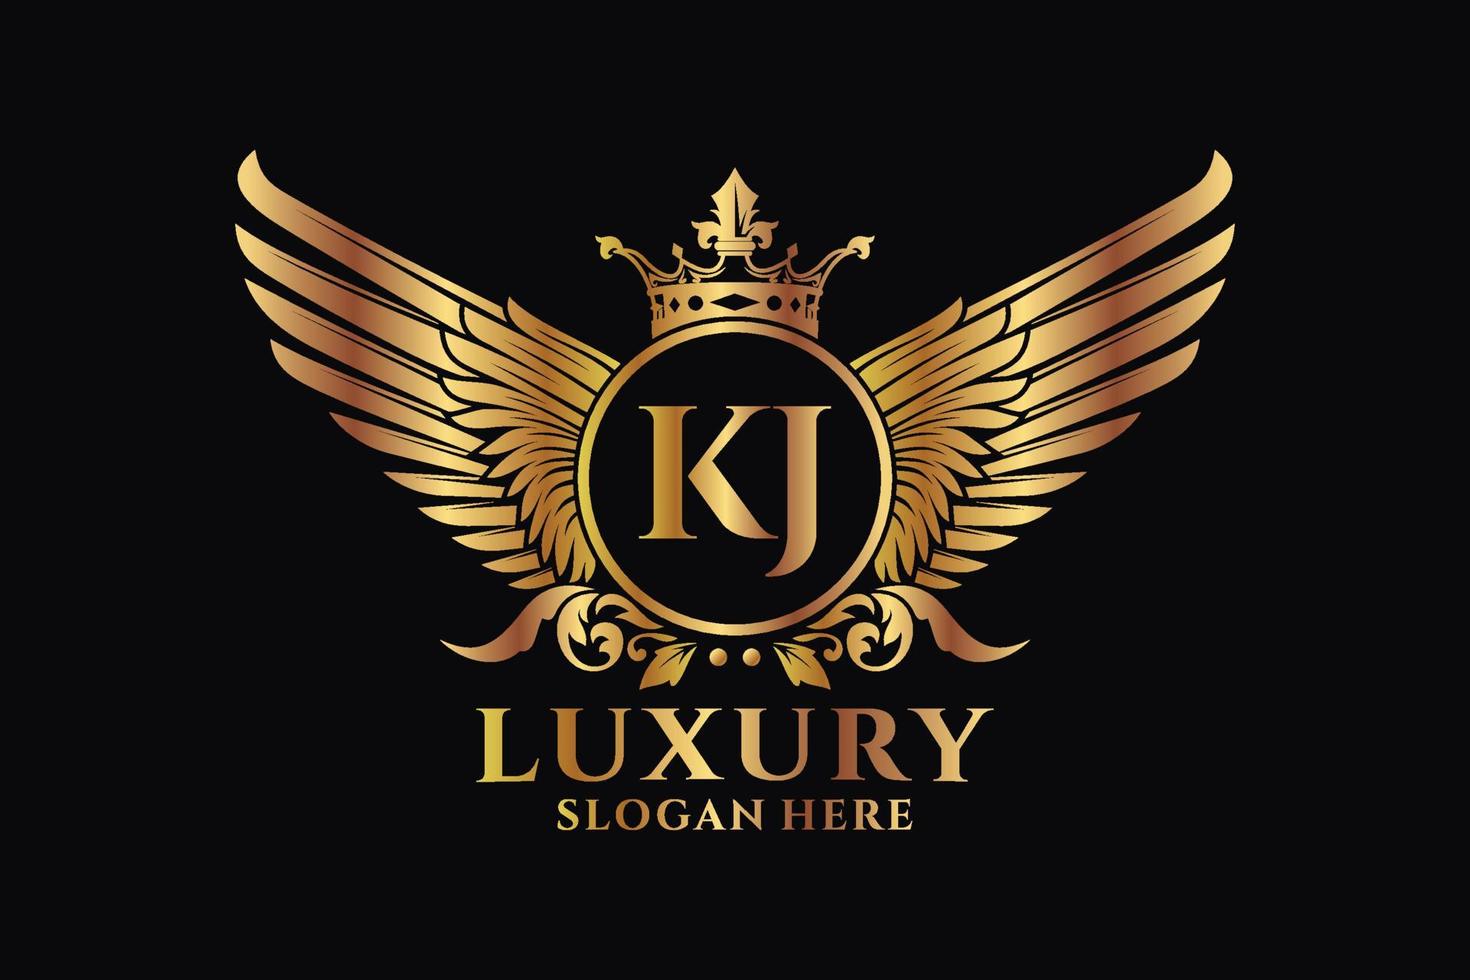 luxe Koninklijk vleugel brief kj kam goud kleur logo vector, zege logo, kam logo, vleugel logo, vector logo sjabloon.